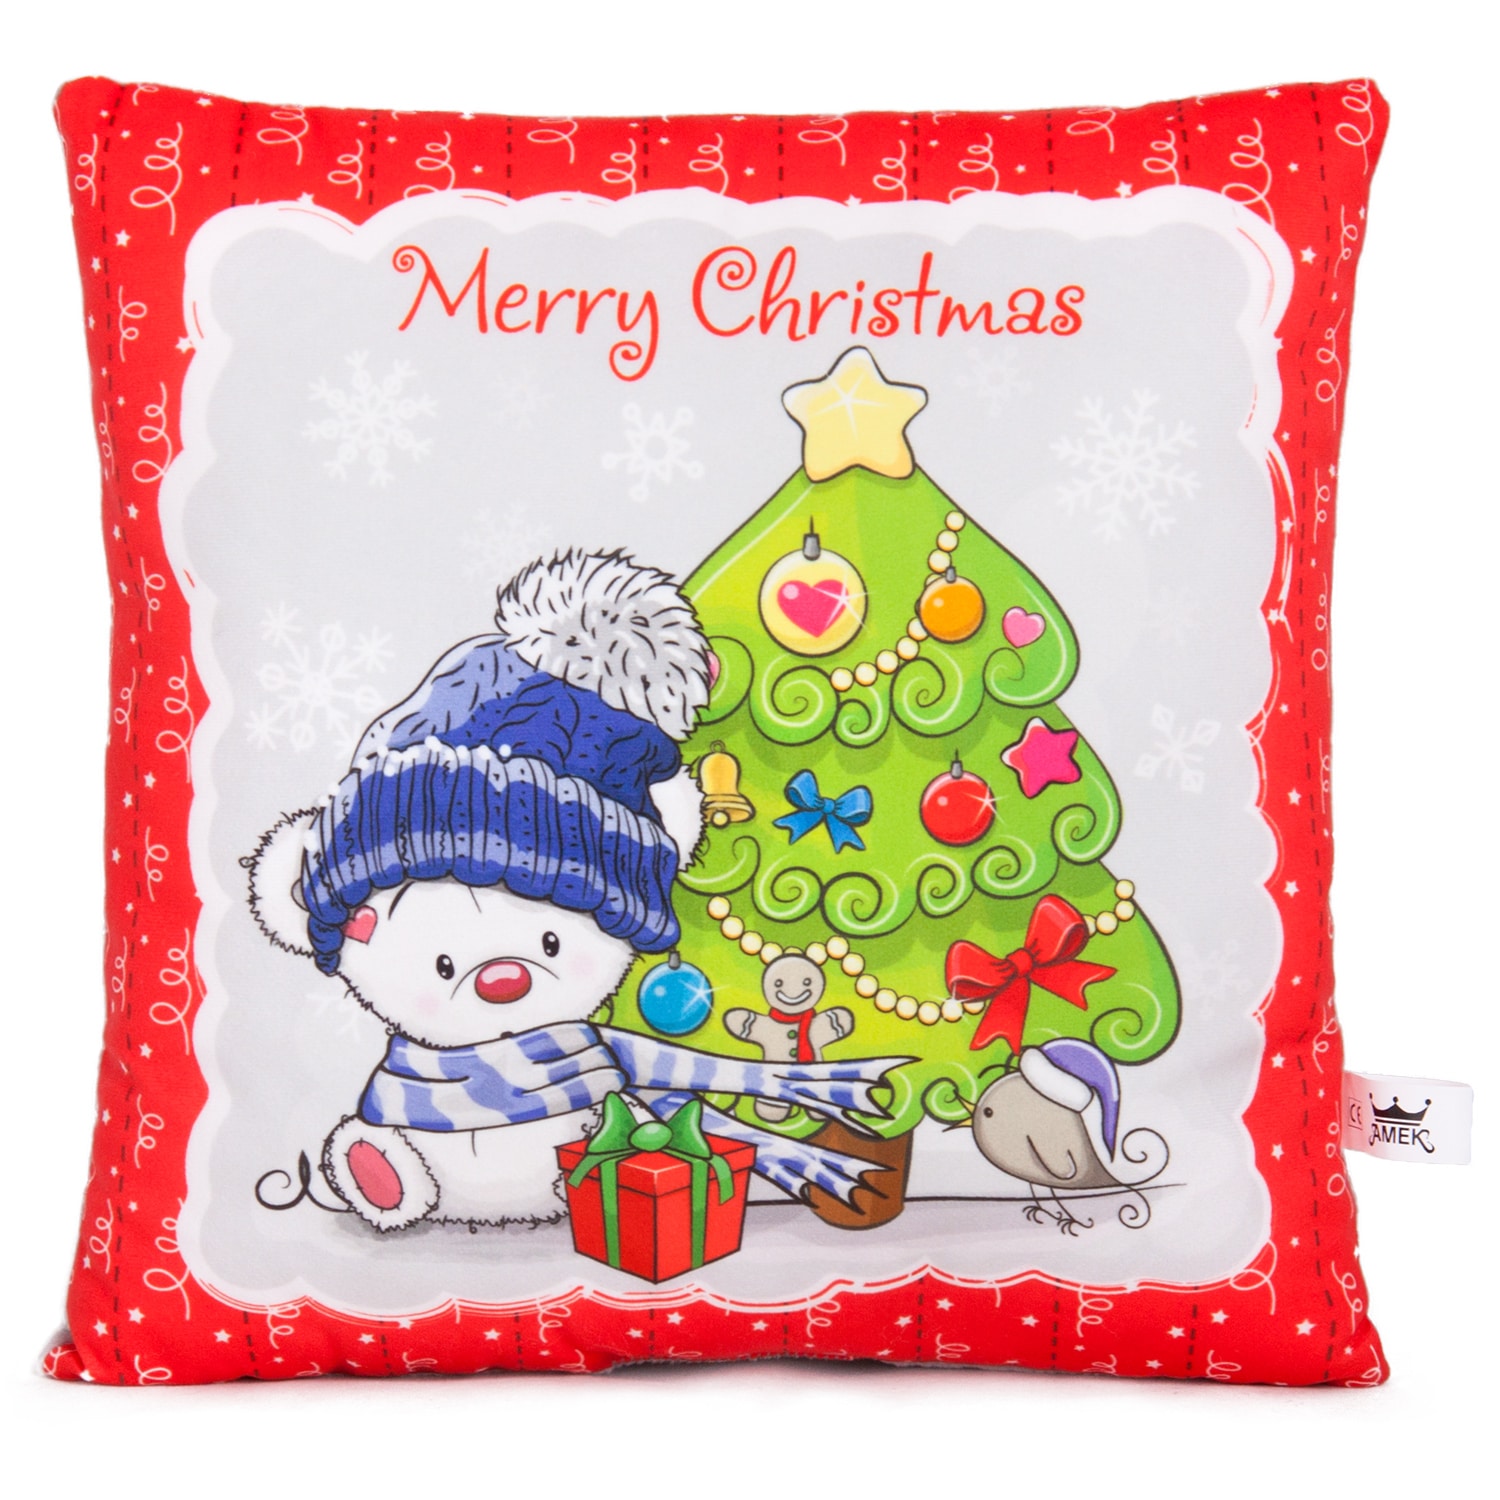 Christmas pillow with bear